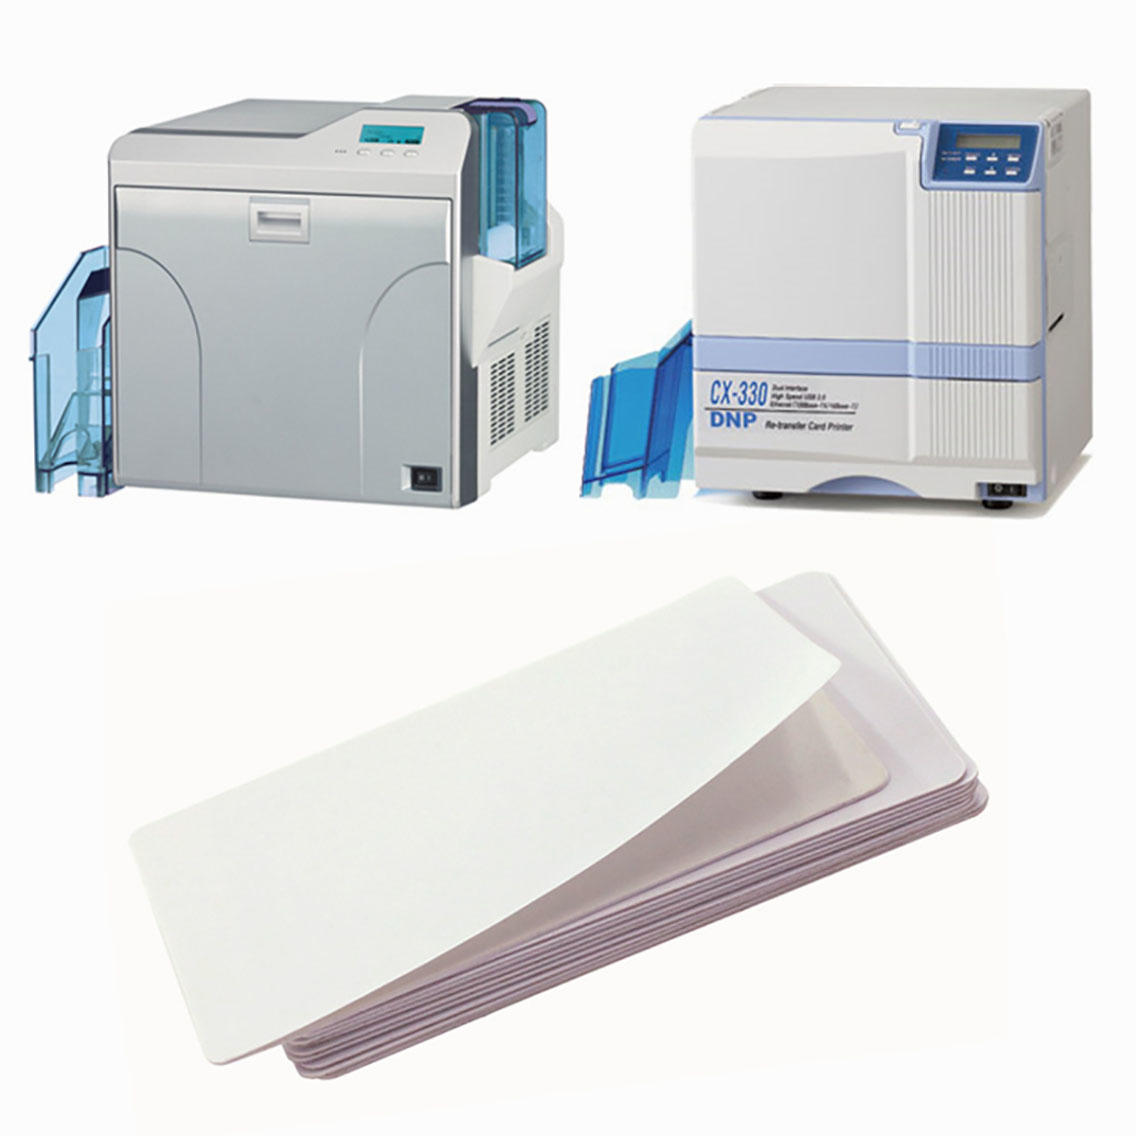 Cleanmo high tack pressure sensitive adhesive Dai Nippon Printer Cleaning Cards factory for DNP CX-210, CX-320 & CX-330 Printers